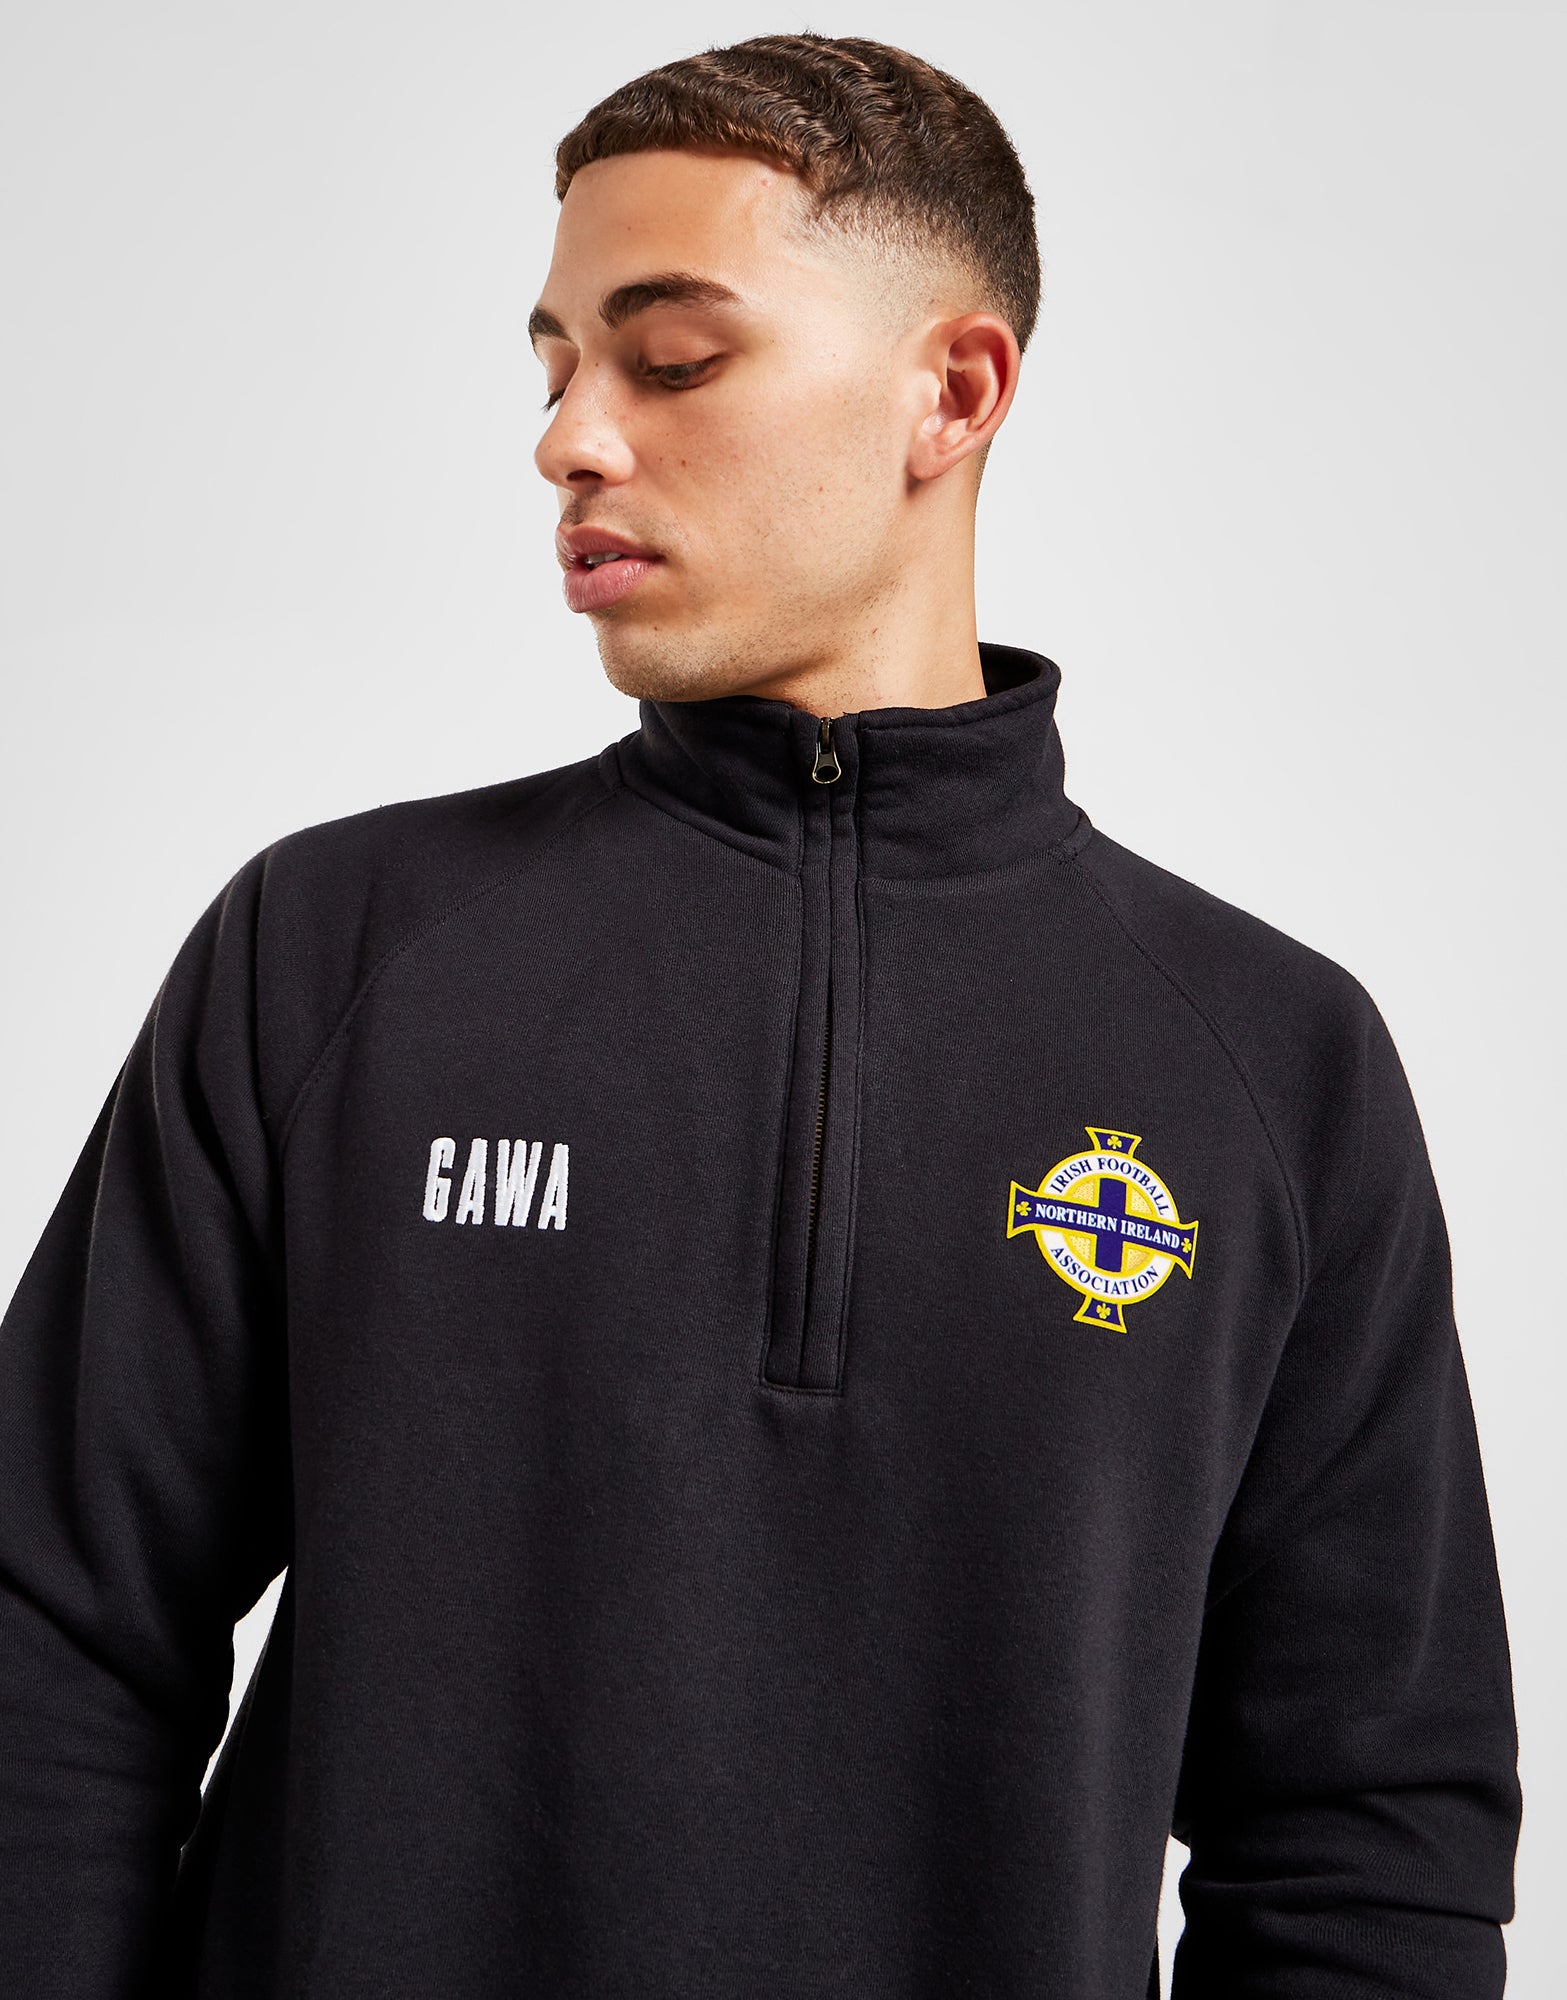 Official Northern Ireland Zip-Neck Sweatshirt - Black - The World Football Store